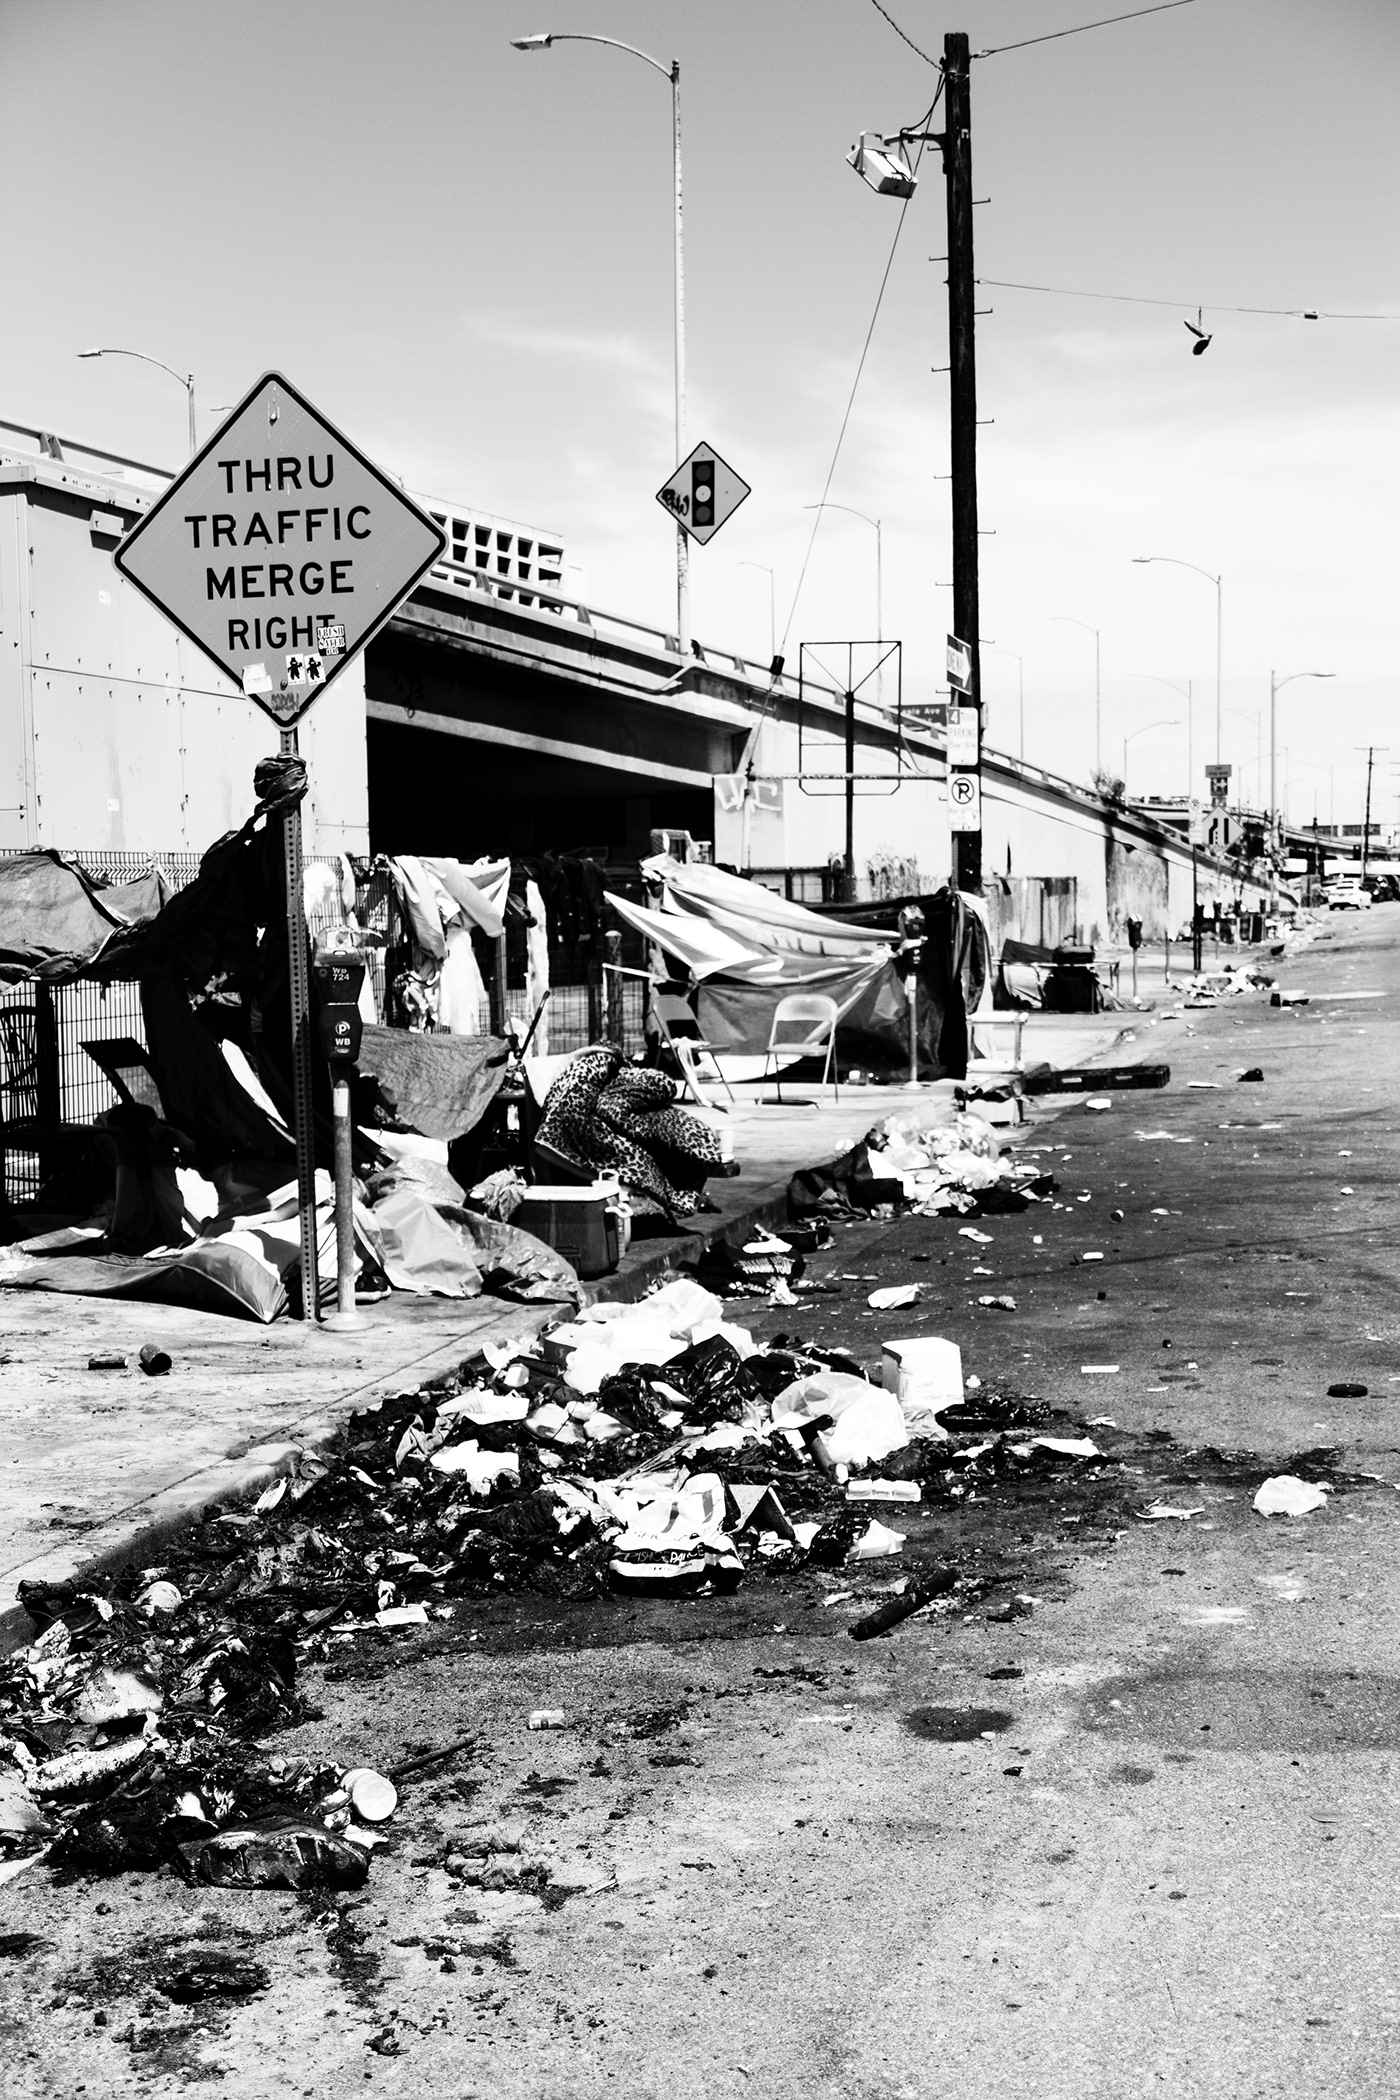 hope hopeless homeless Los Angeles Photography  street photography Poverty awareness